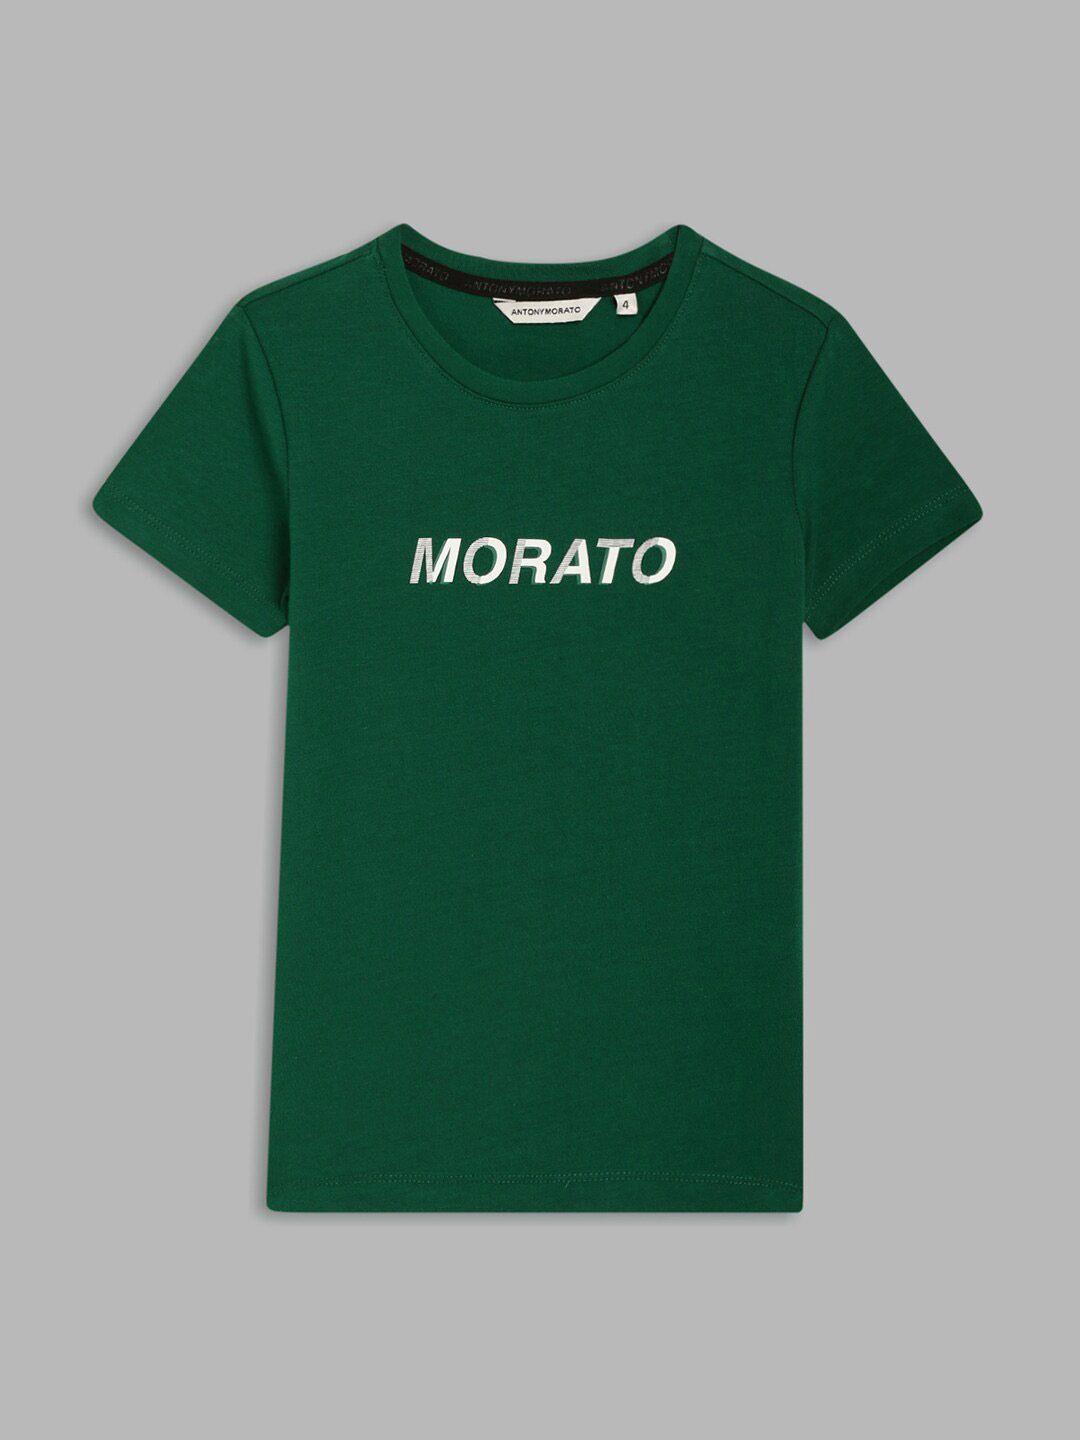 Antony Morato Boys Green & White Typography Cotton Printed T-shirt